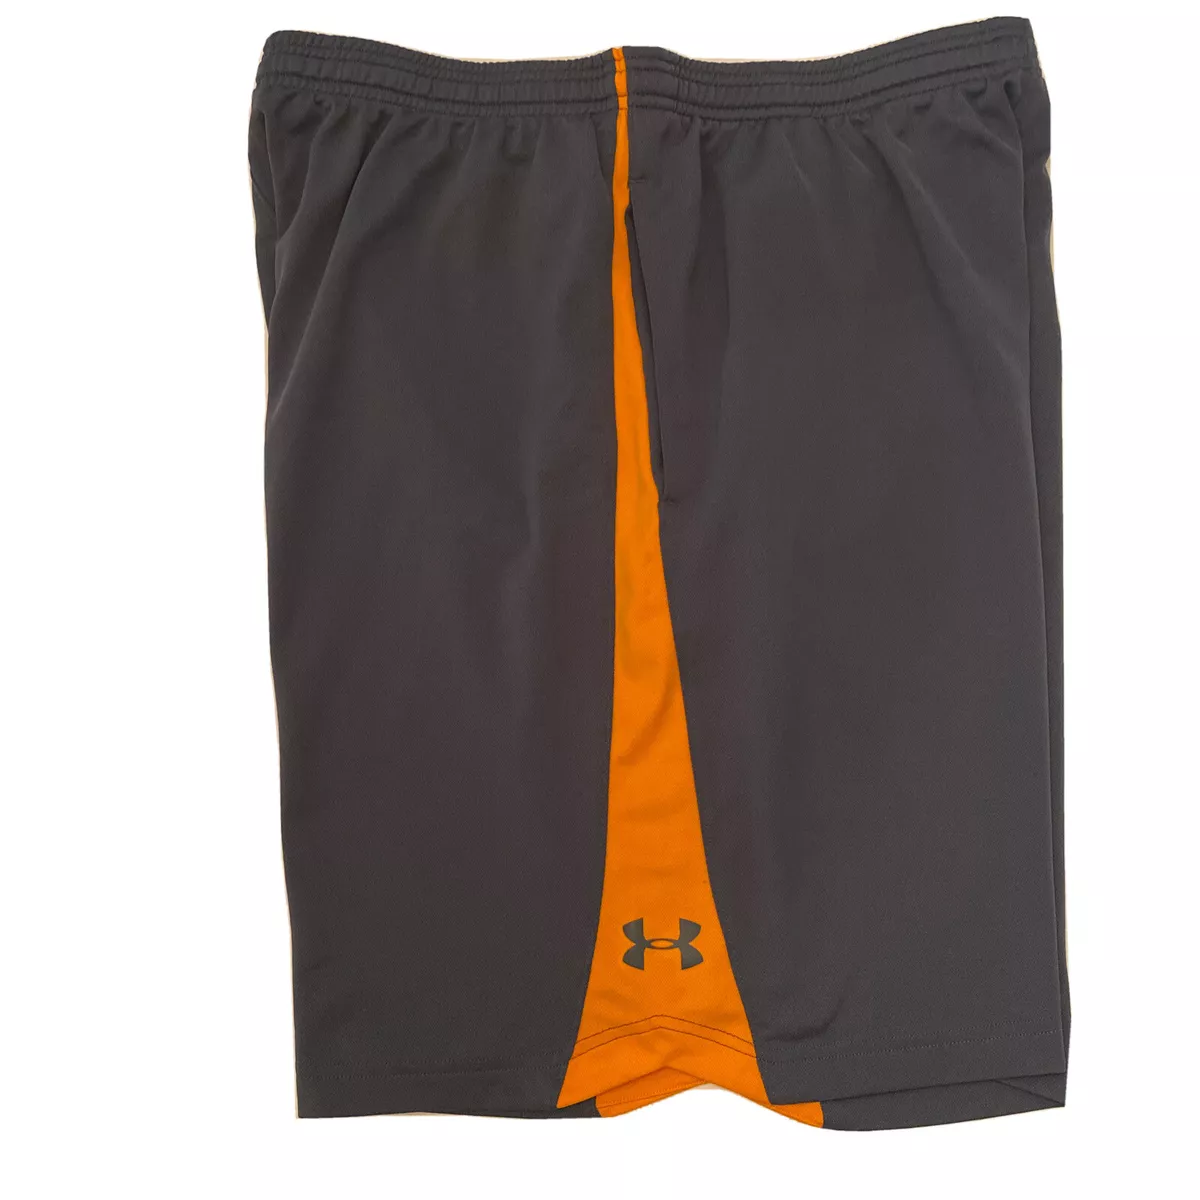 under armor men’s basketball shorts gray orange size XL/TG